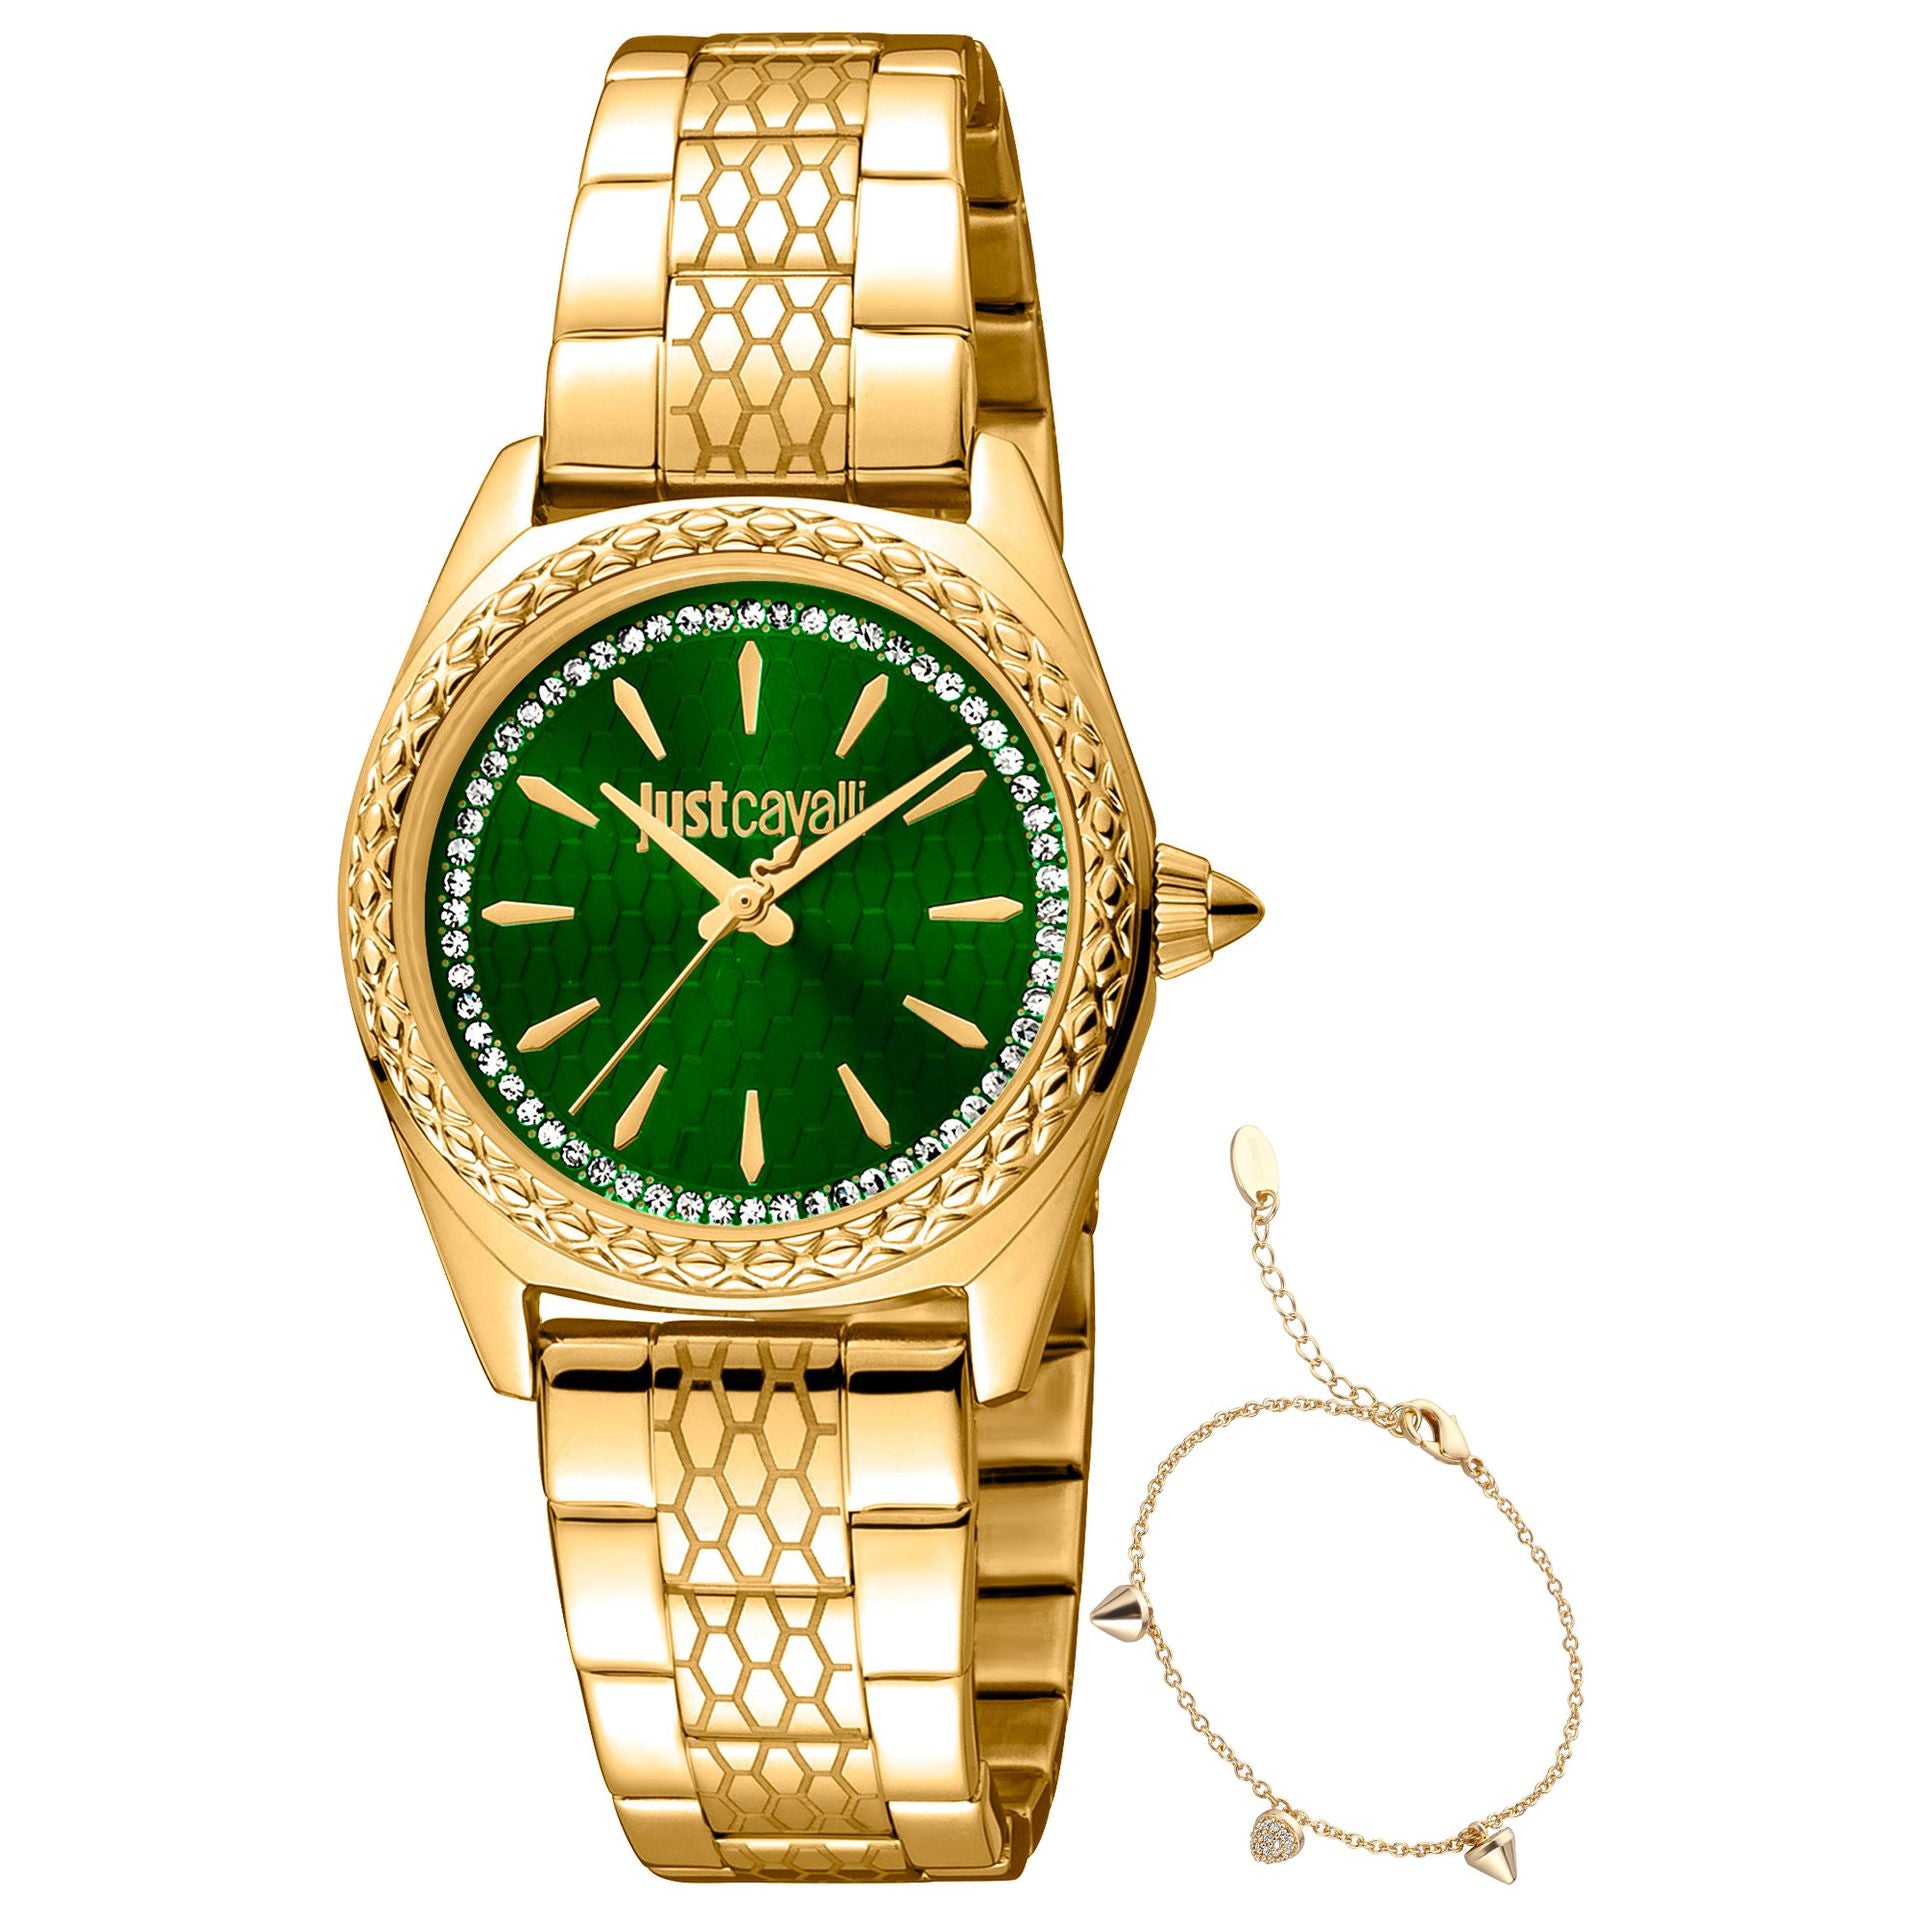 Just Cavalli Watches – Carauana Store